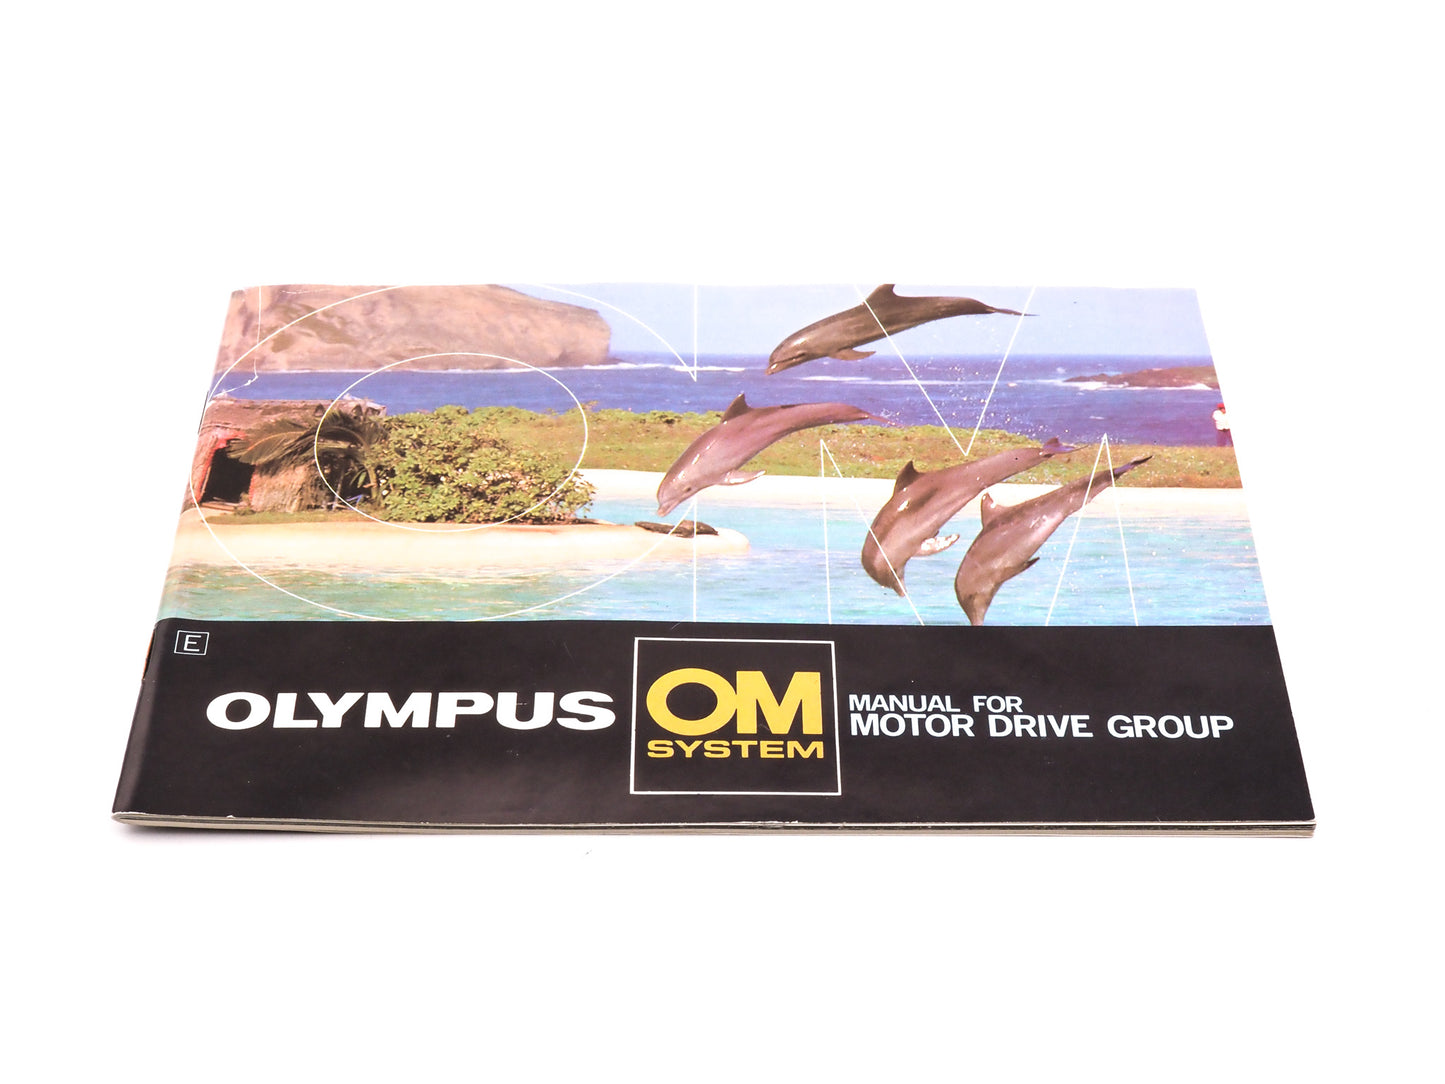 Olympus Manual for Motor Drive Group